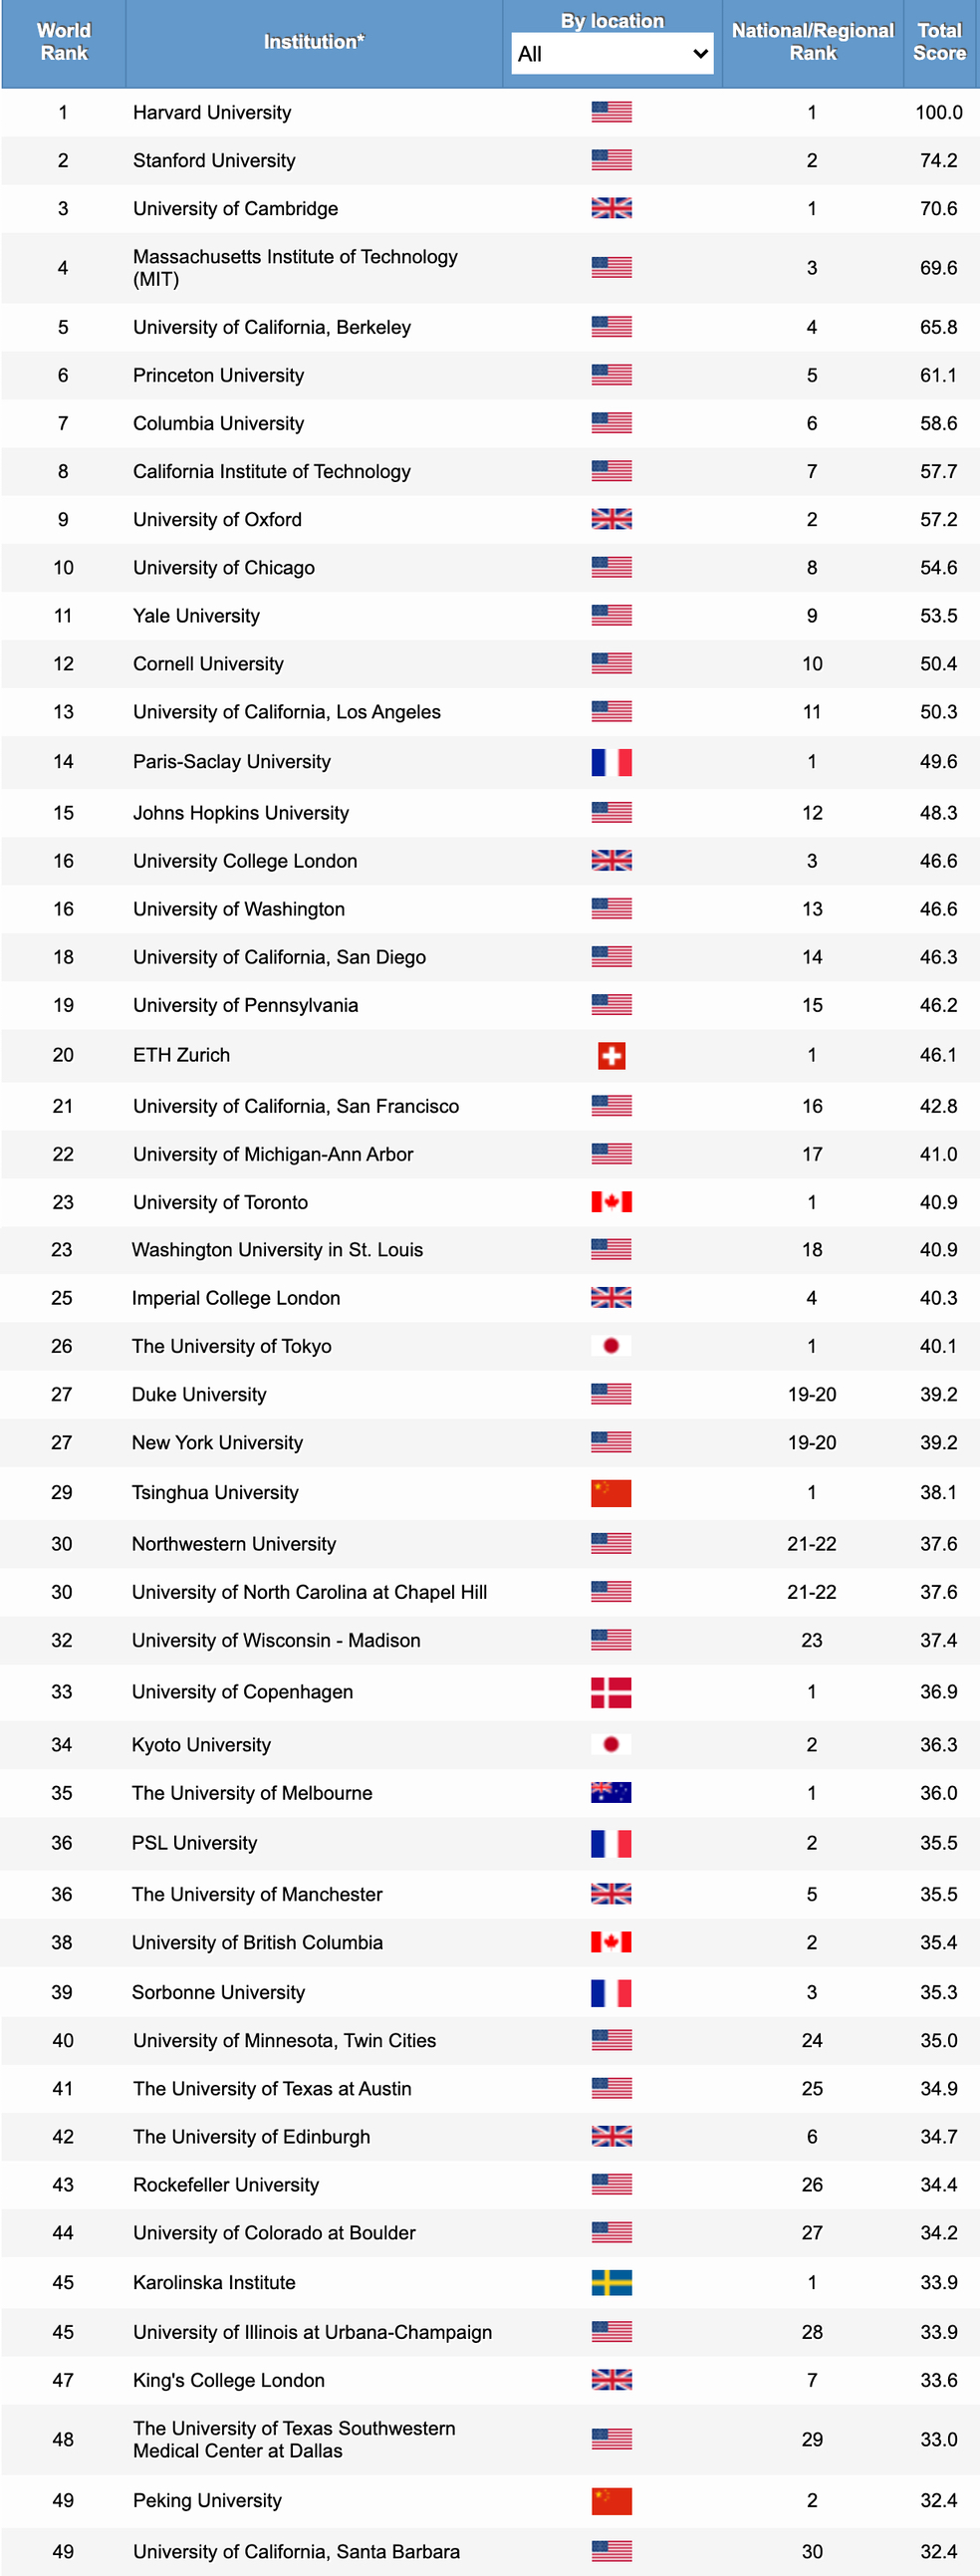 Chinese universities gain in rankings of world's top schools